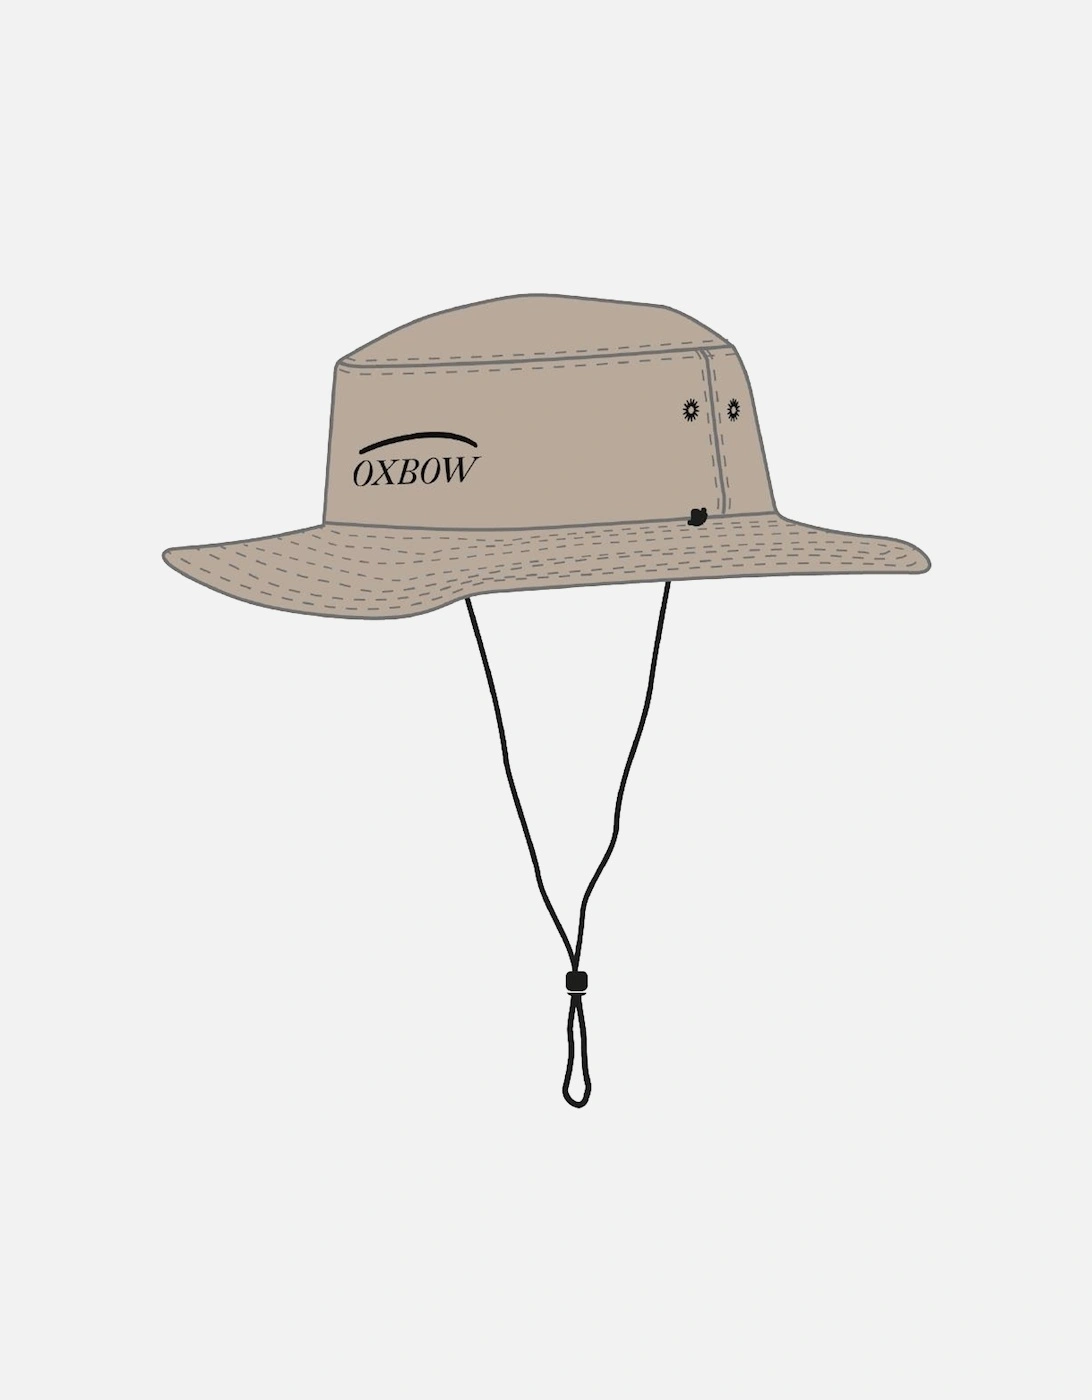 Ebush Bushman Boonie Safari Outback Bucket Hat